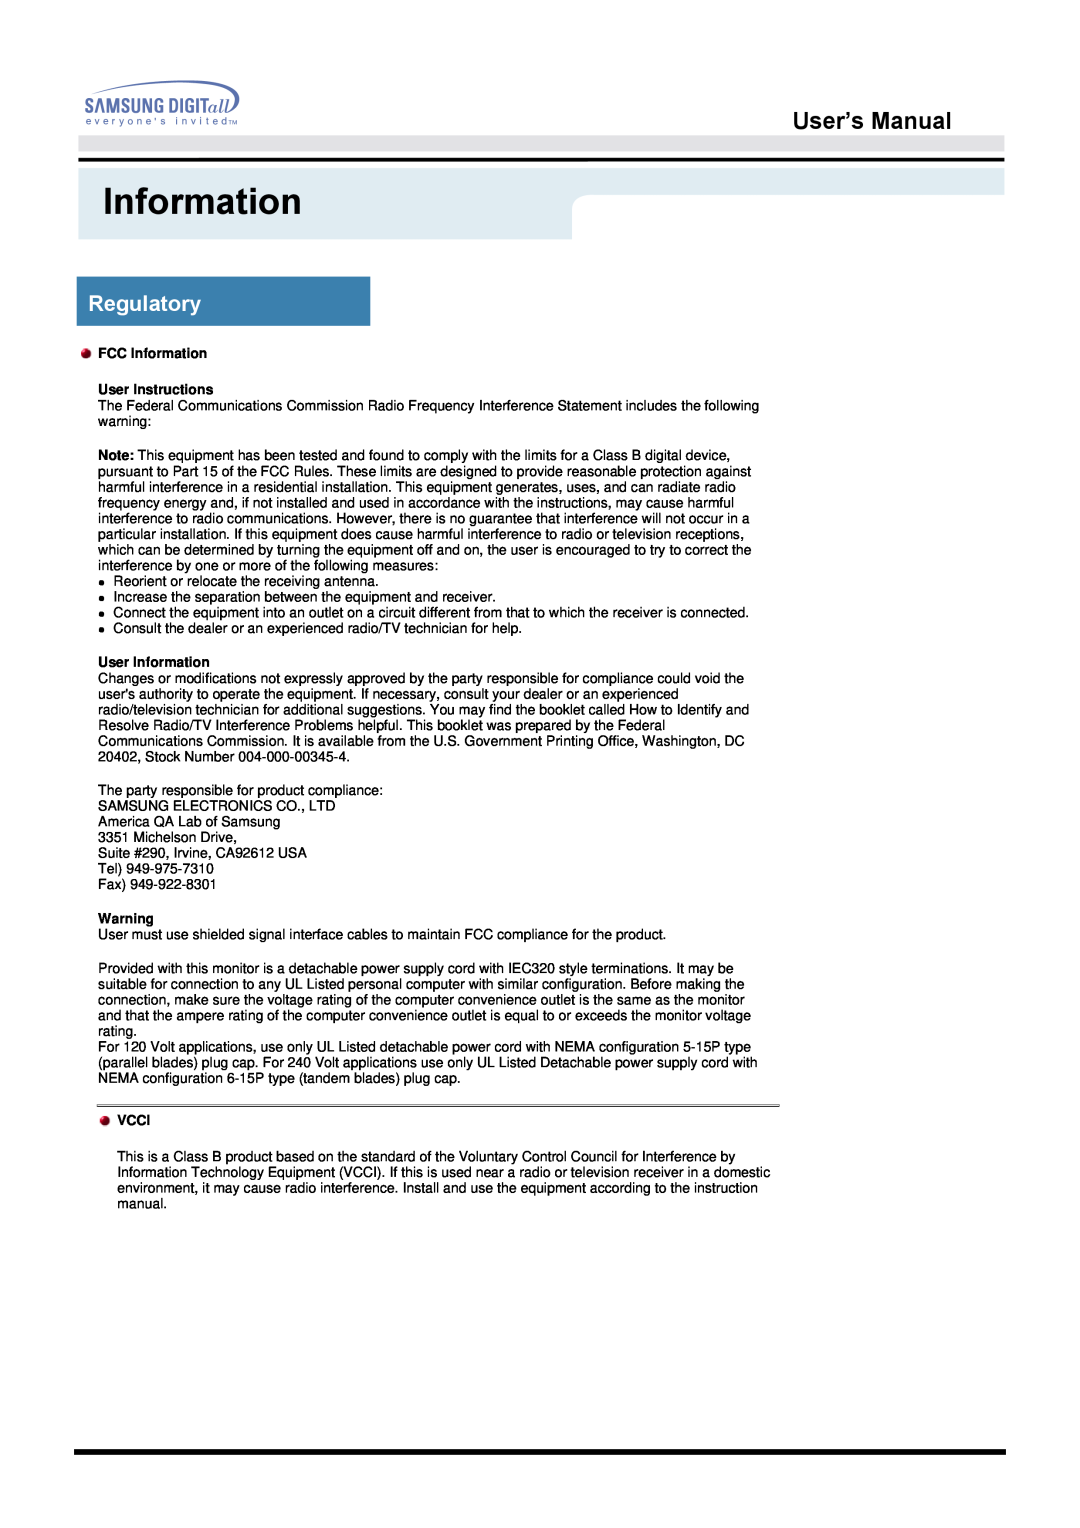 Samsung 172S manual Regulatory, User’s Manual, FCC Information User Instructions, User Information, Vcci 